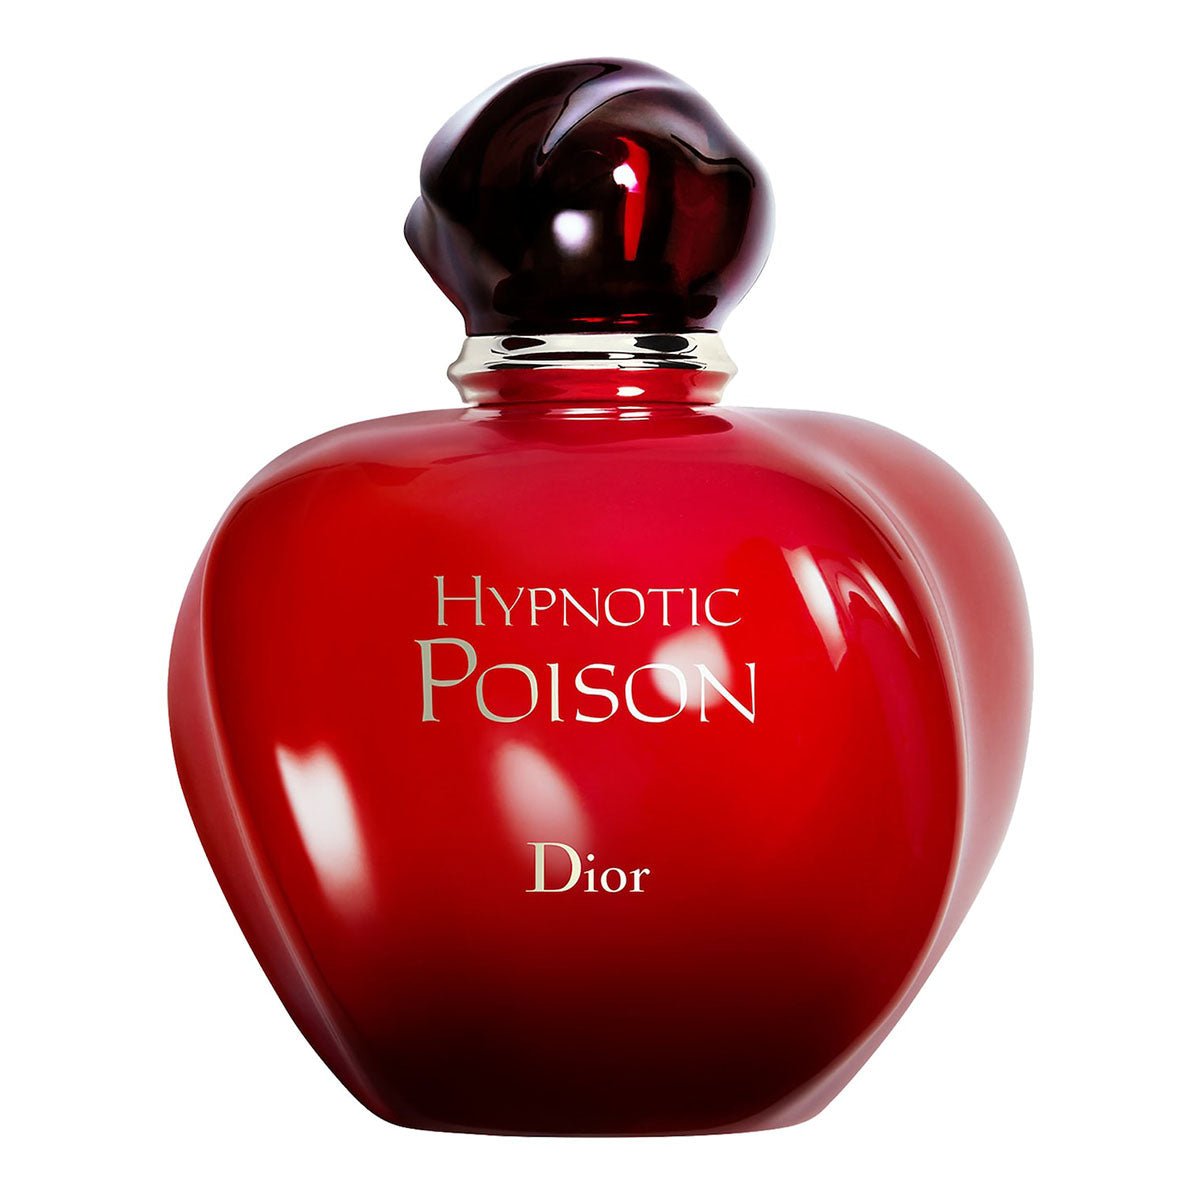 Christian Dior Hypnotic Poison For Women Edt Spray 100ml -Perfume - AllurebeautypkChristian Dior Hypnotic Poison For Women Edt Spray 100ml -Perfume